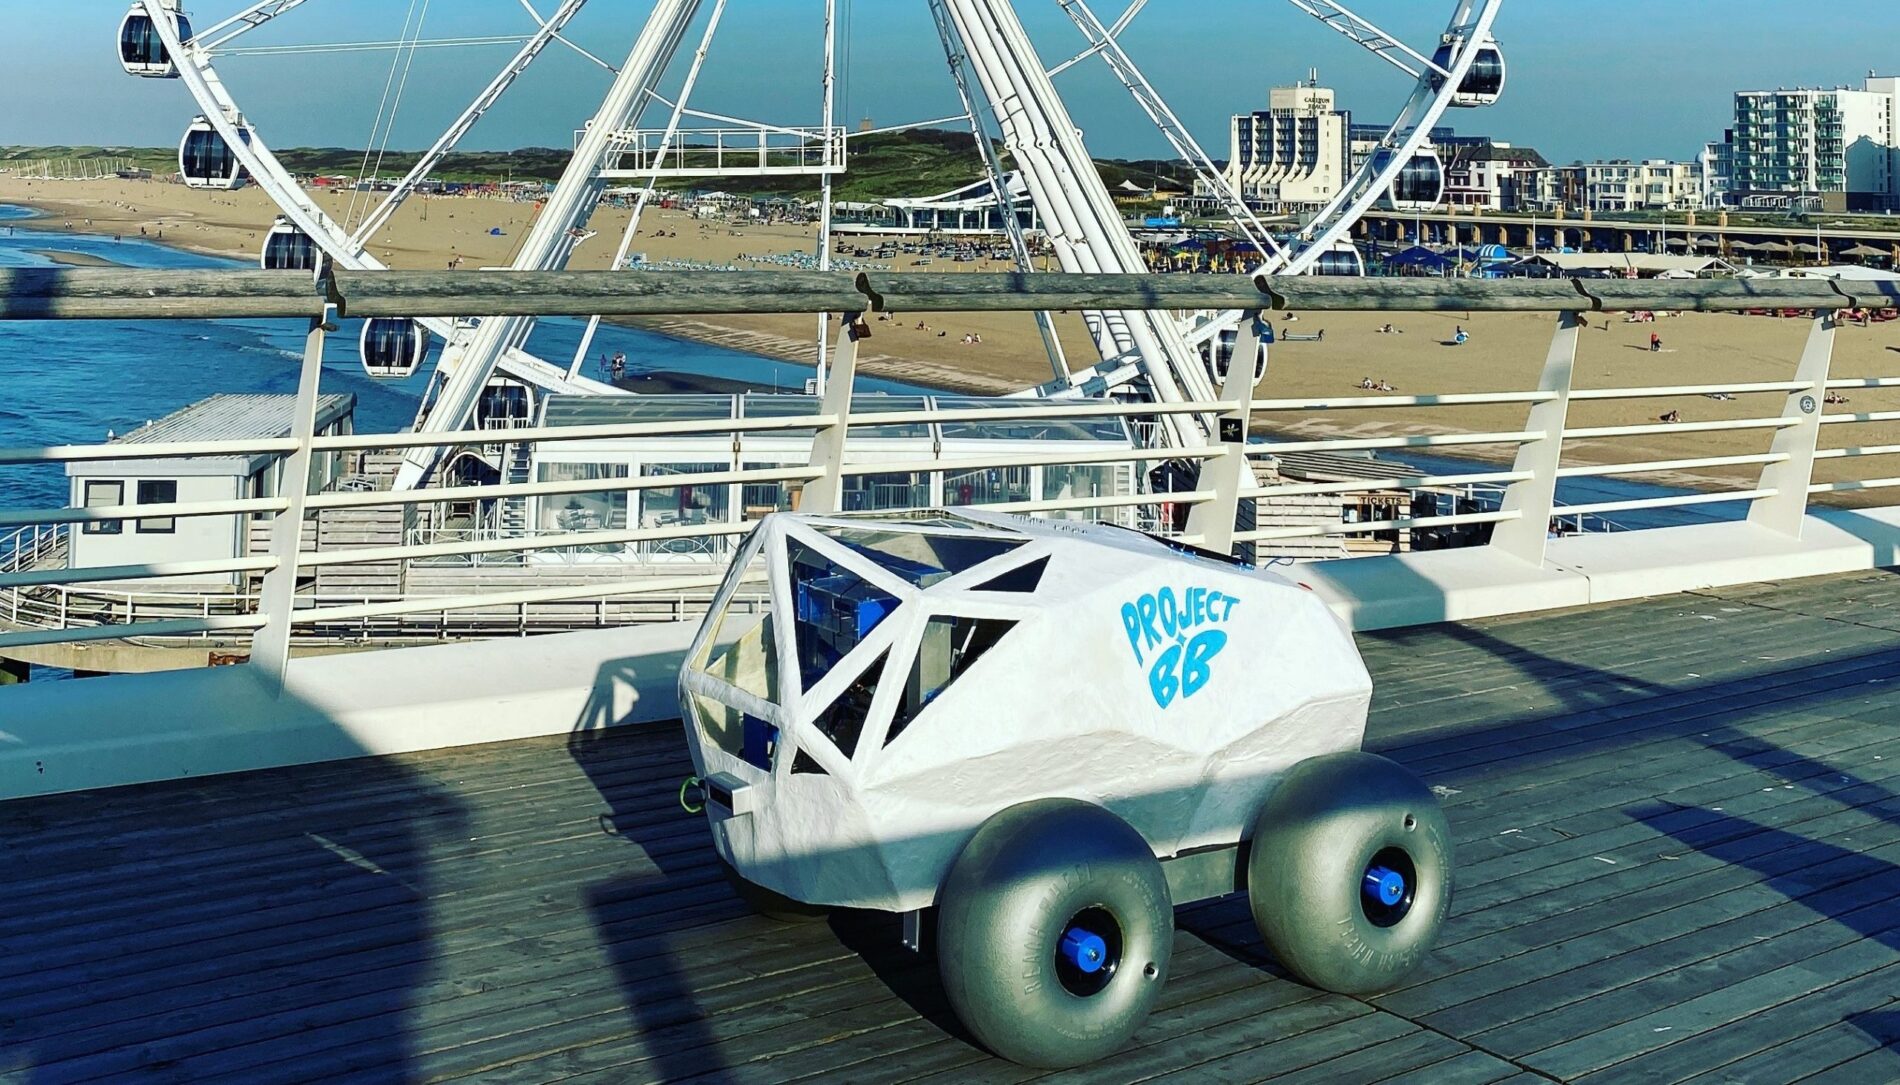 BeachBot sits on a raised boardwalk at Scheveningen Beach with the Ferris wheel in the background